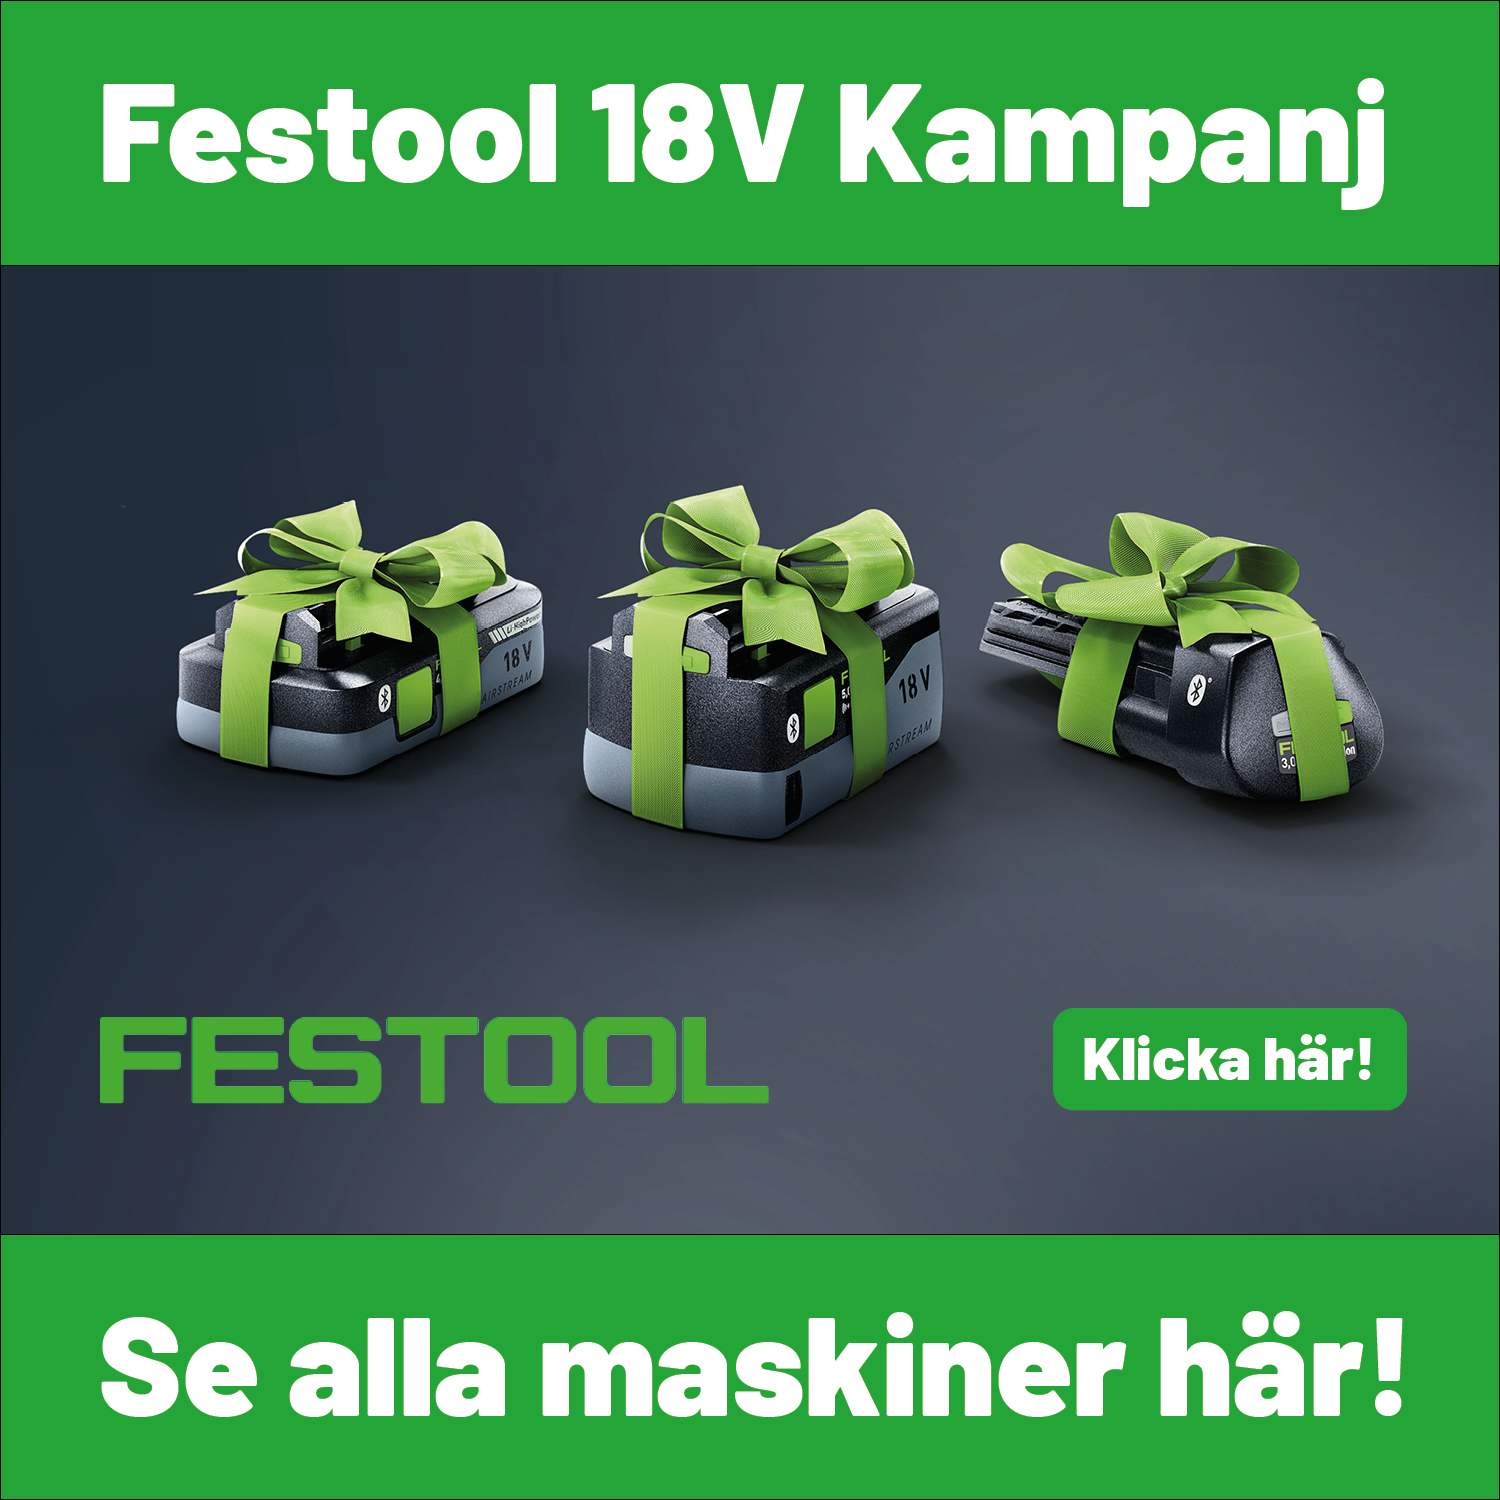 Festool 18V kampanj